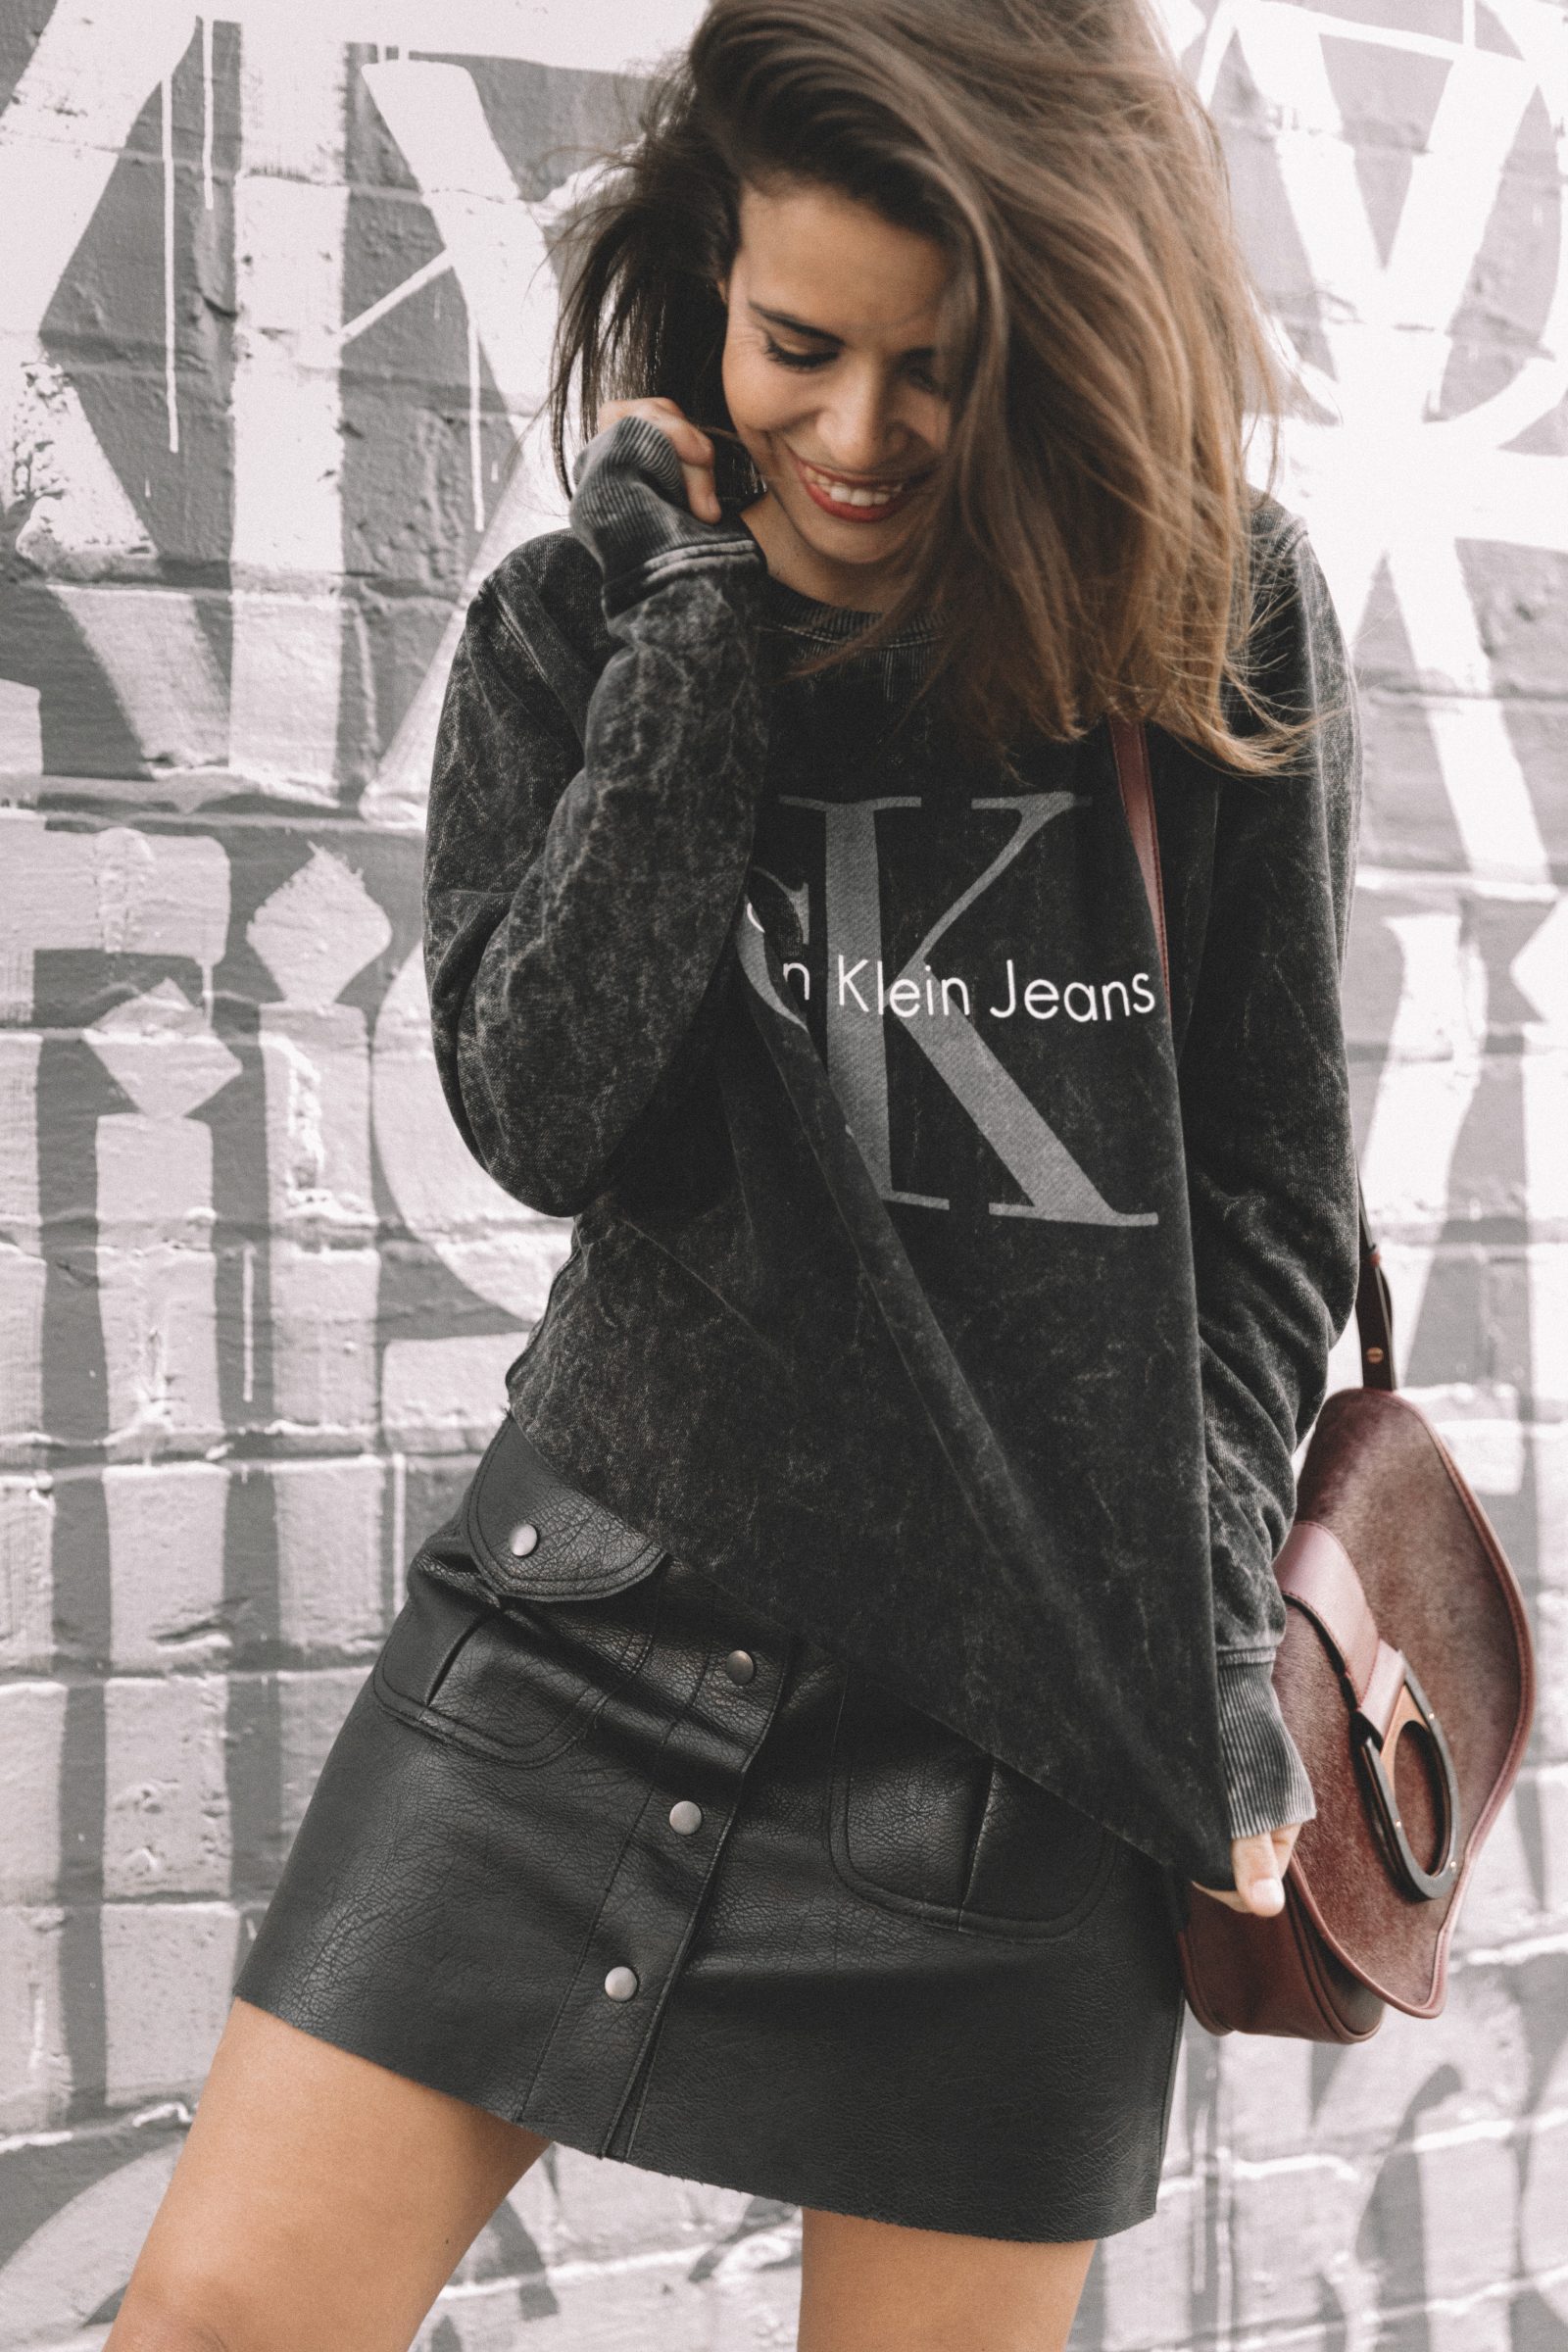 calvin_klein_bag-burgundy_bag-ck_sweatshirt-leather_shirt-total_black_outfit-street_style-los_angeles-collage_vintage-39